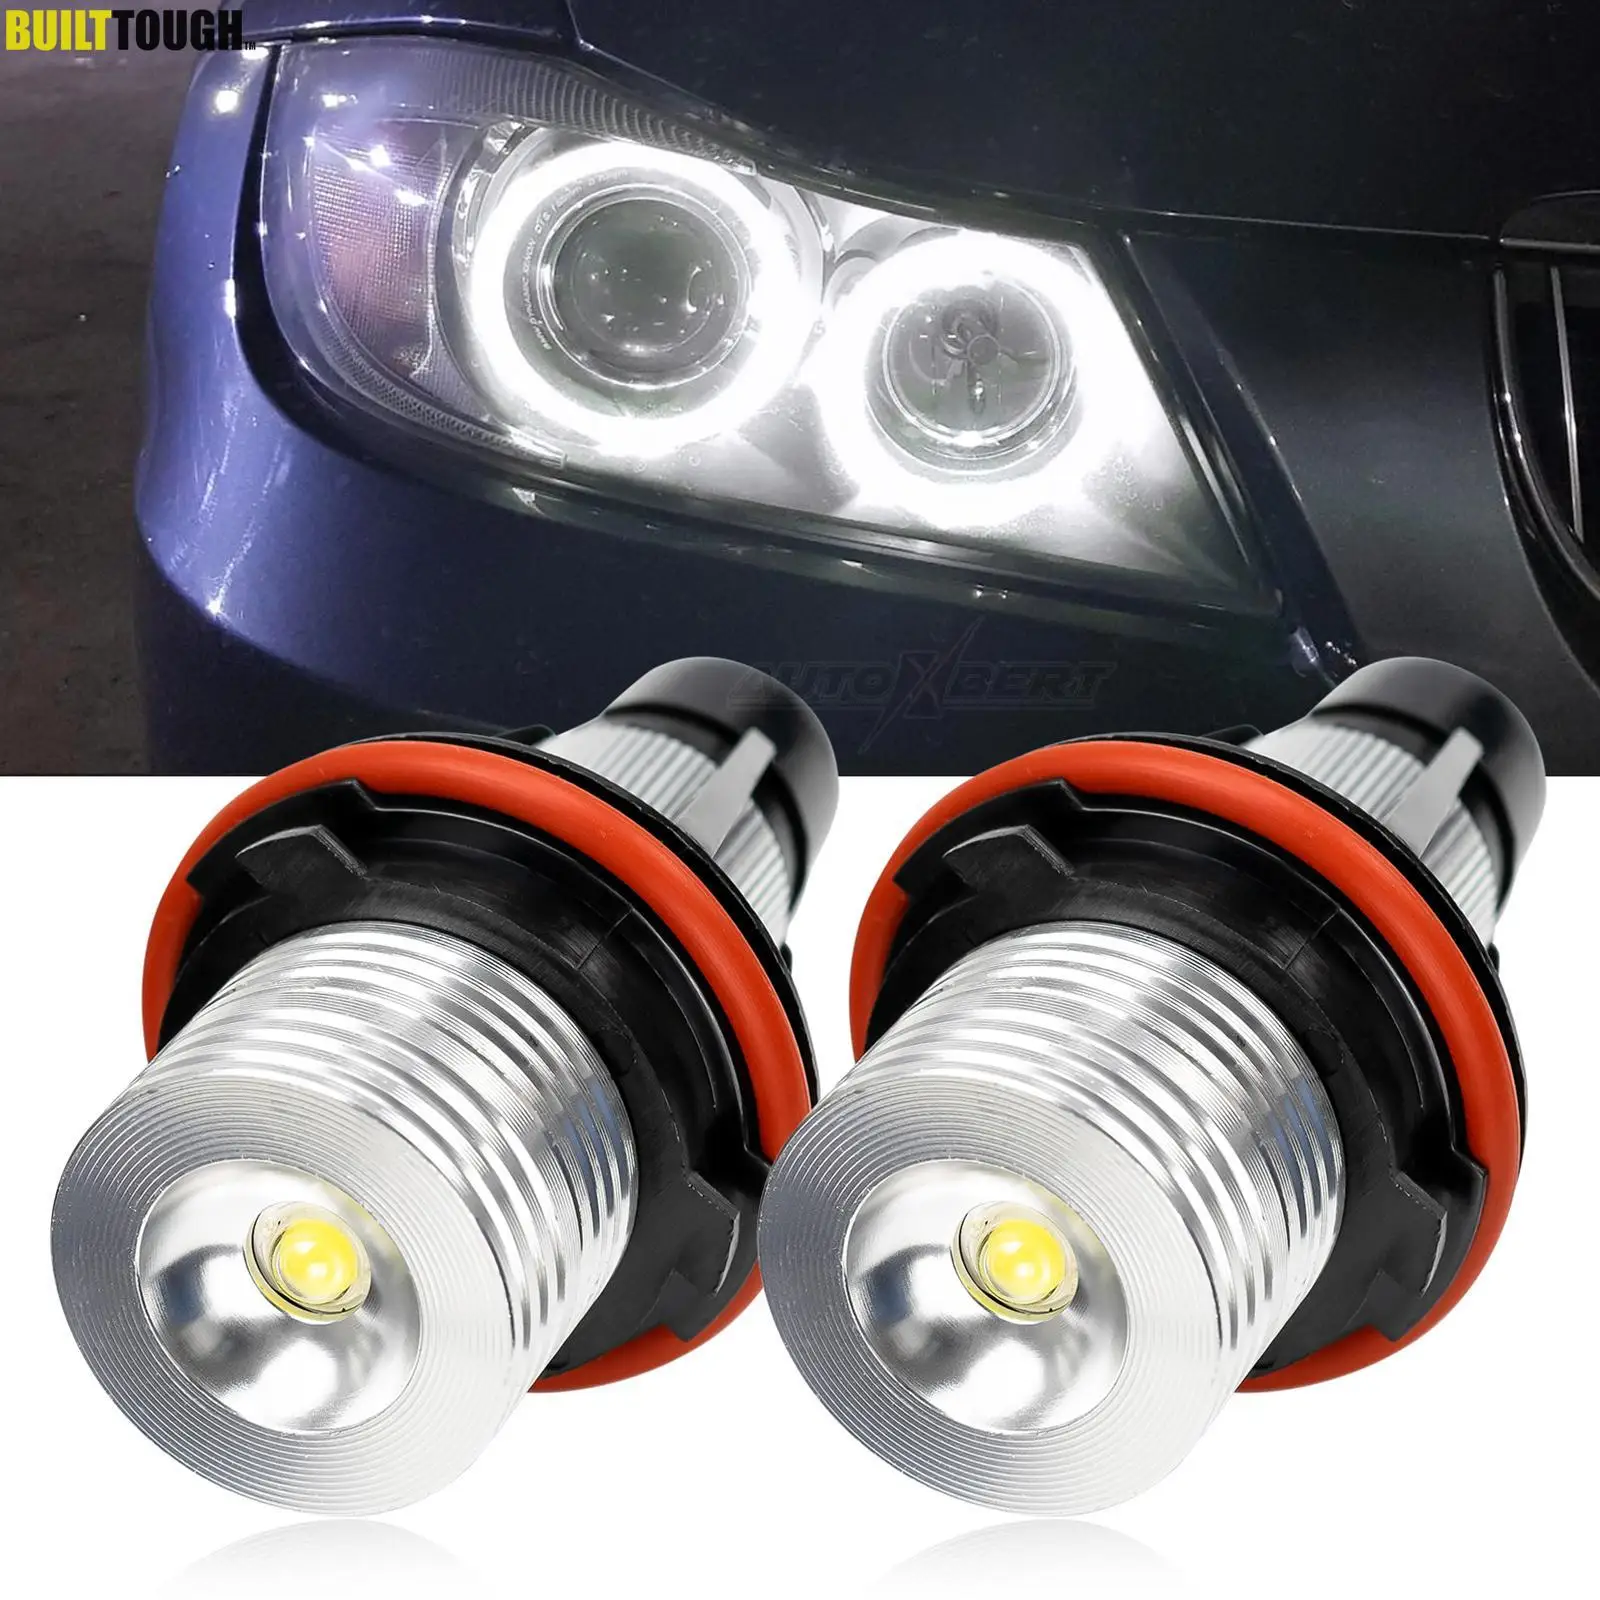 

White 10W Error Free LED Angel Eyes Halo Ring Marker Bulbs Replacement For BMW 5 6 7 Series X3 X5 E39 E53 E63 E64 E65 E66 E83